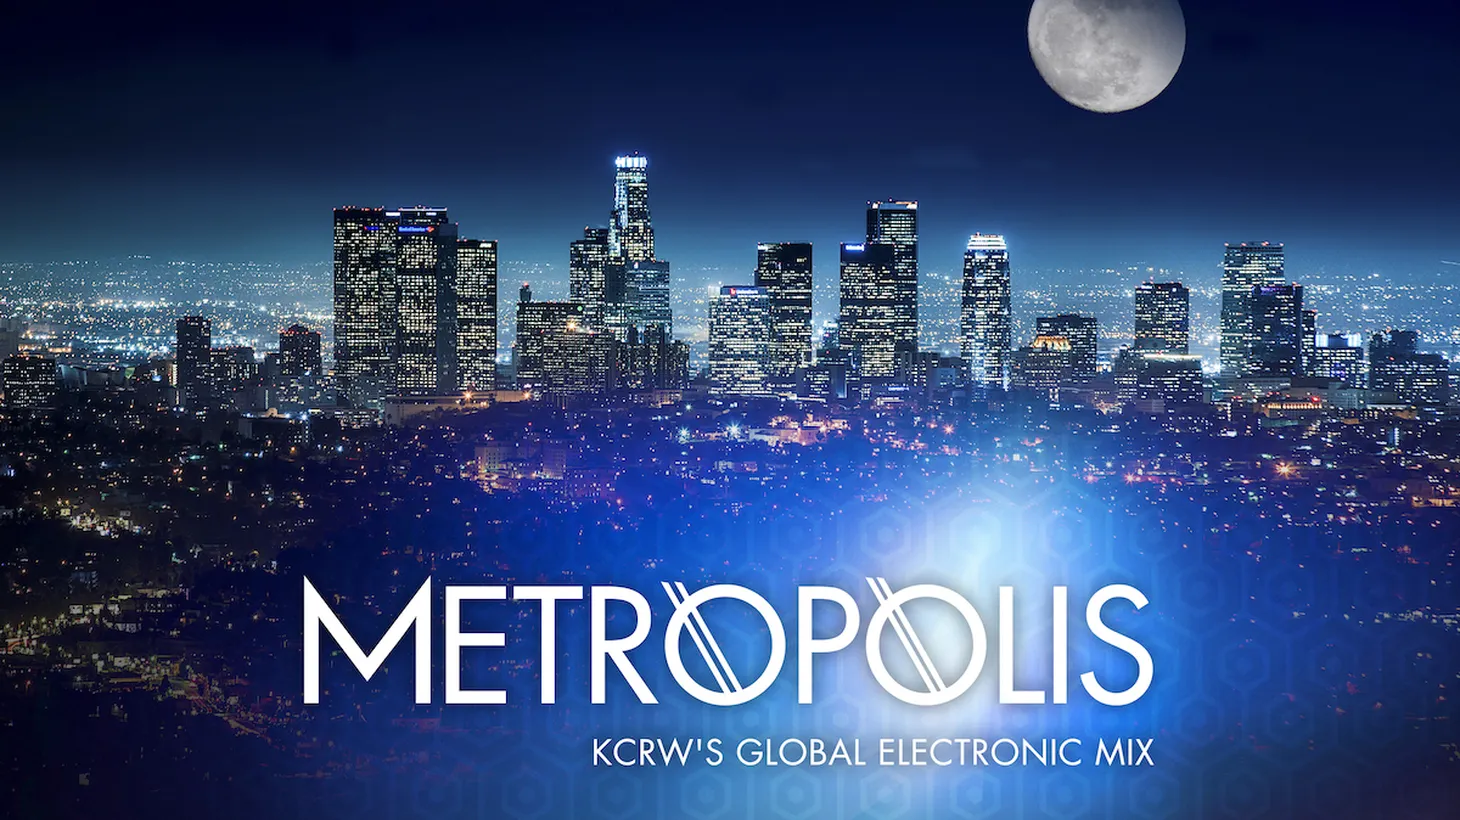 Metropolis playlist January 7, 2023.